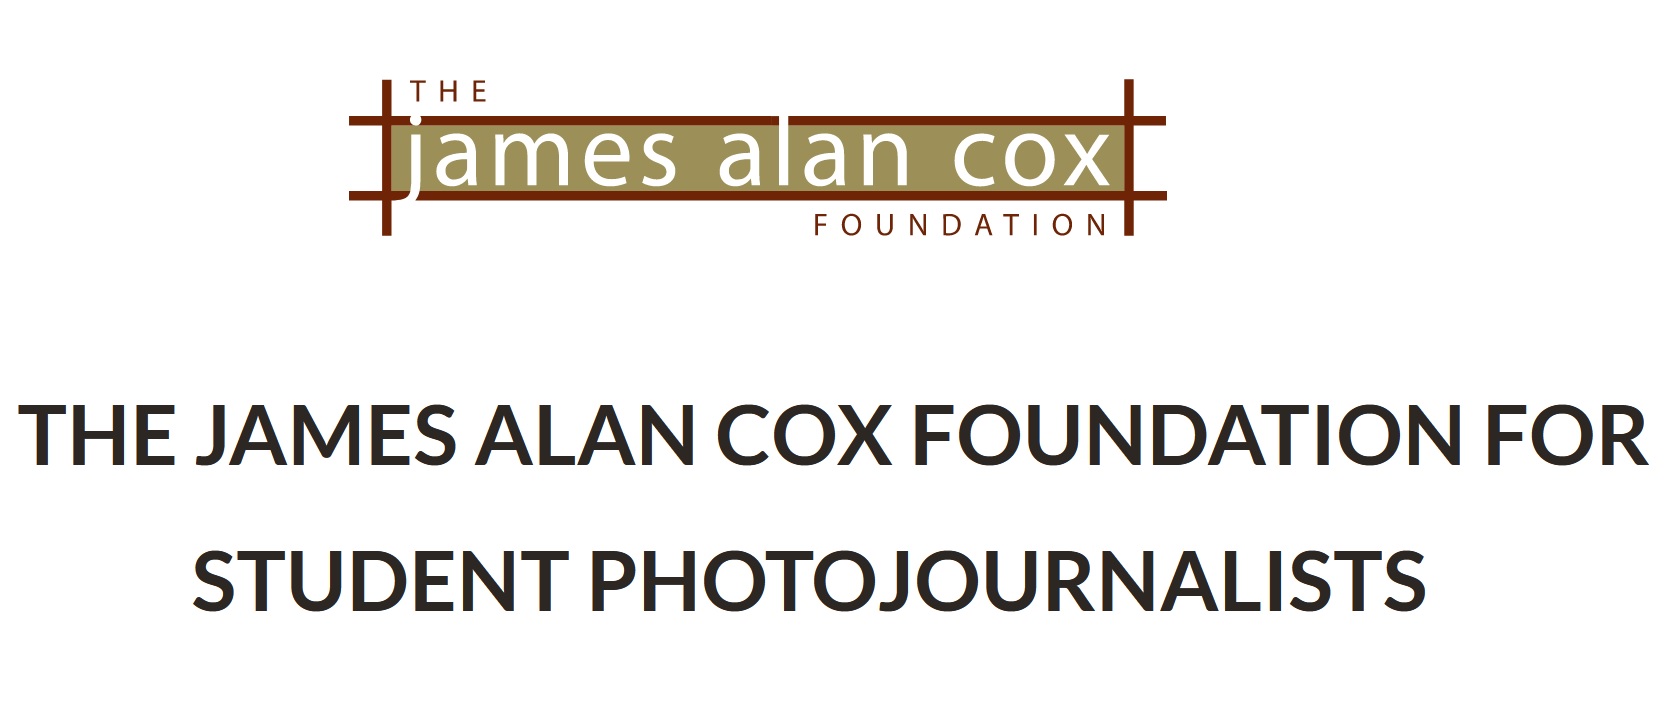 James Alan Cox Foundation for Student Photojournalists - logo